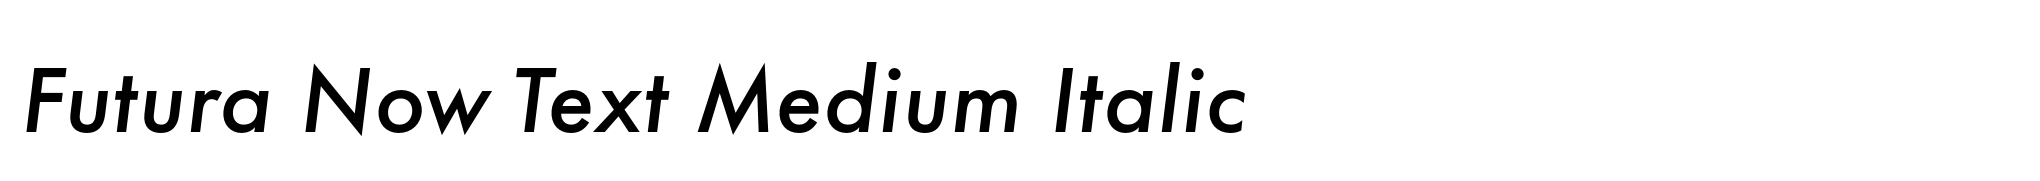 Futura Now Text Medium Italic image